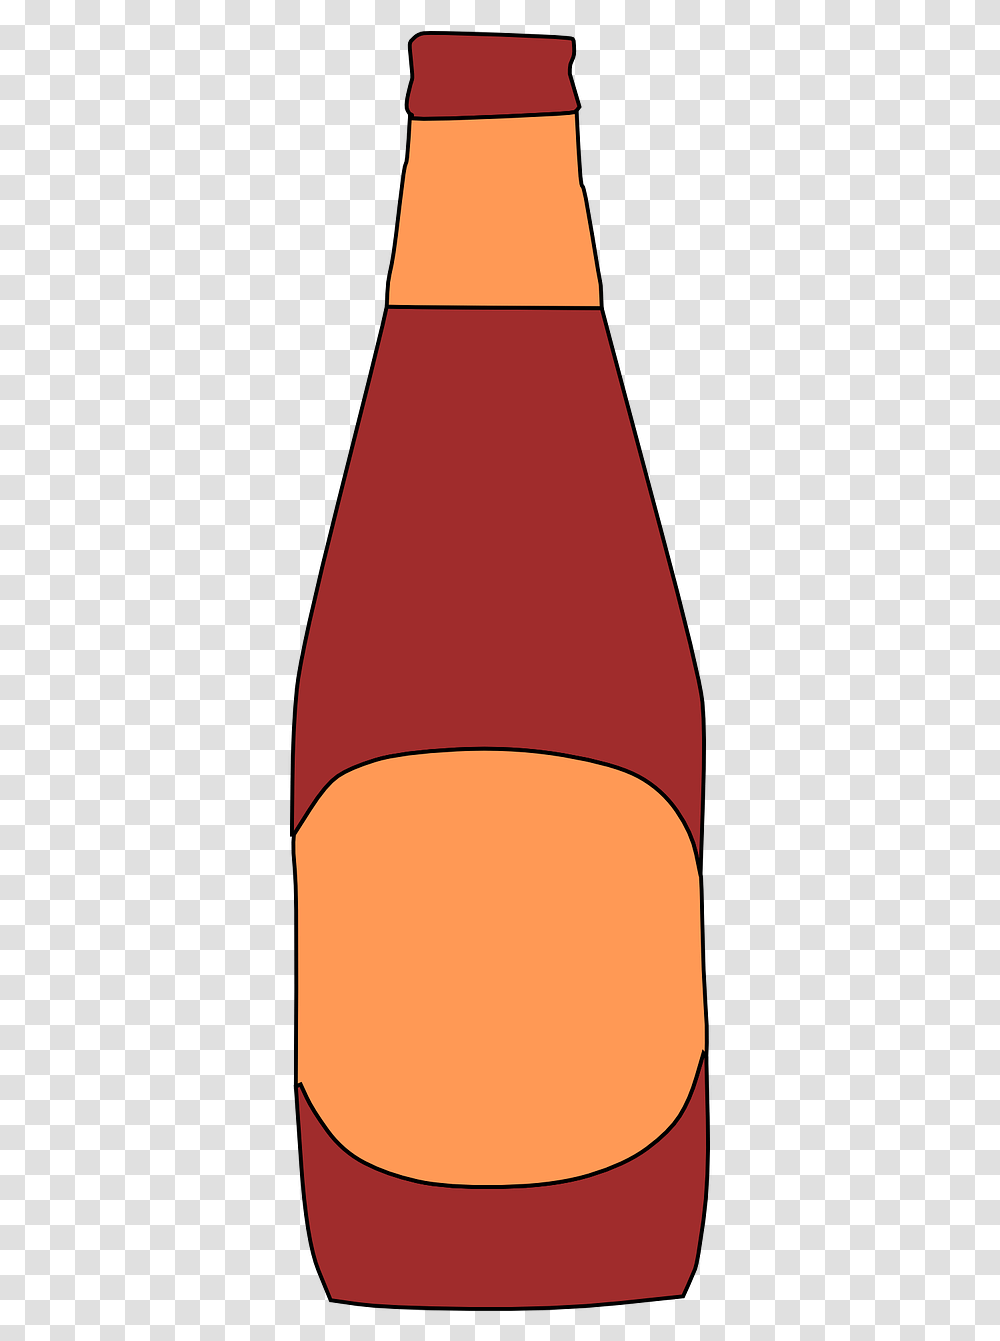 Cartoon Beer Bottle Clipart Download Beer Bottle Cartoon, Cowbell, Scroll, Maroon, Logo Transparent Png